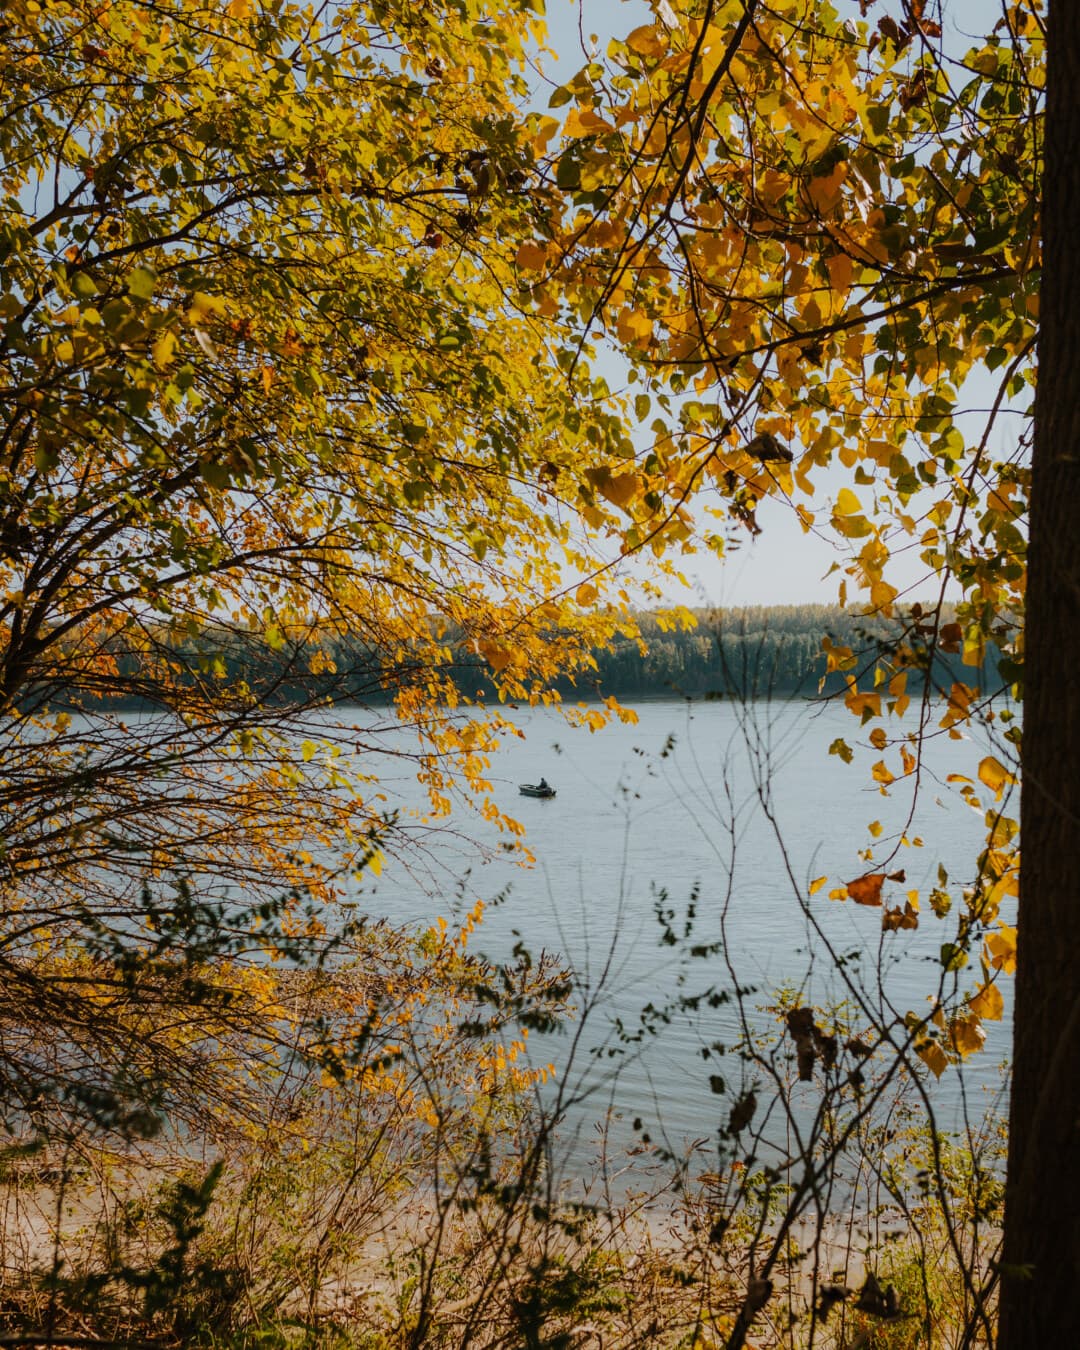 grane, žućkasto smeđa, žuto lišće, jesen, obala rijeke, priroda, topola, šuma, jesen, breza